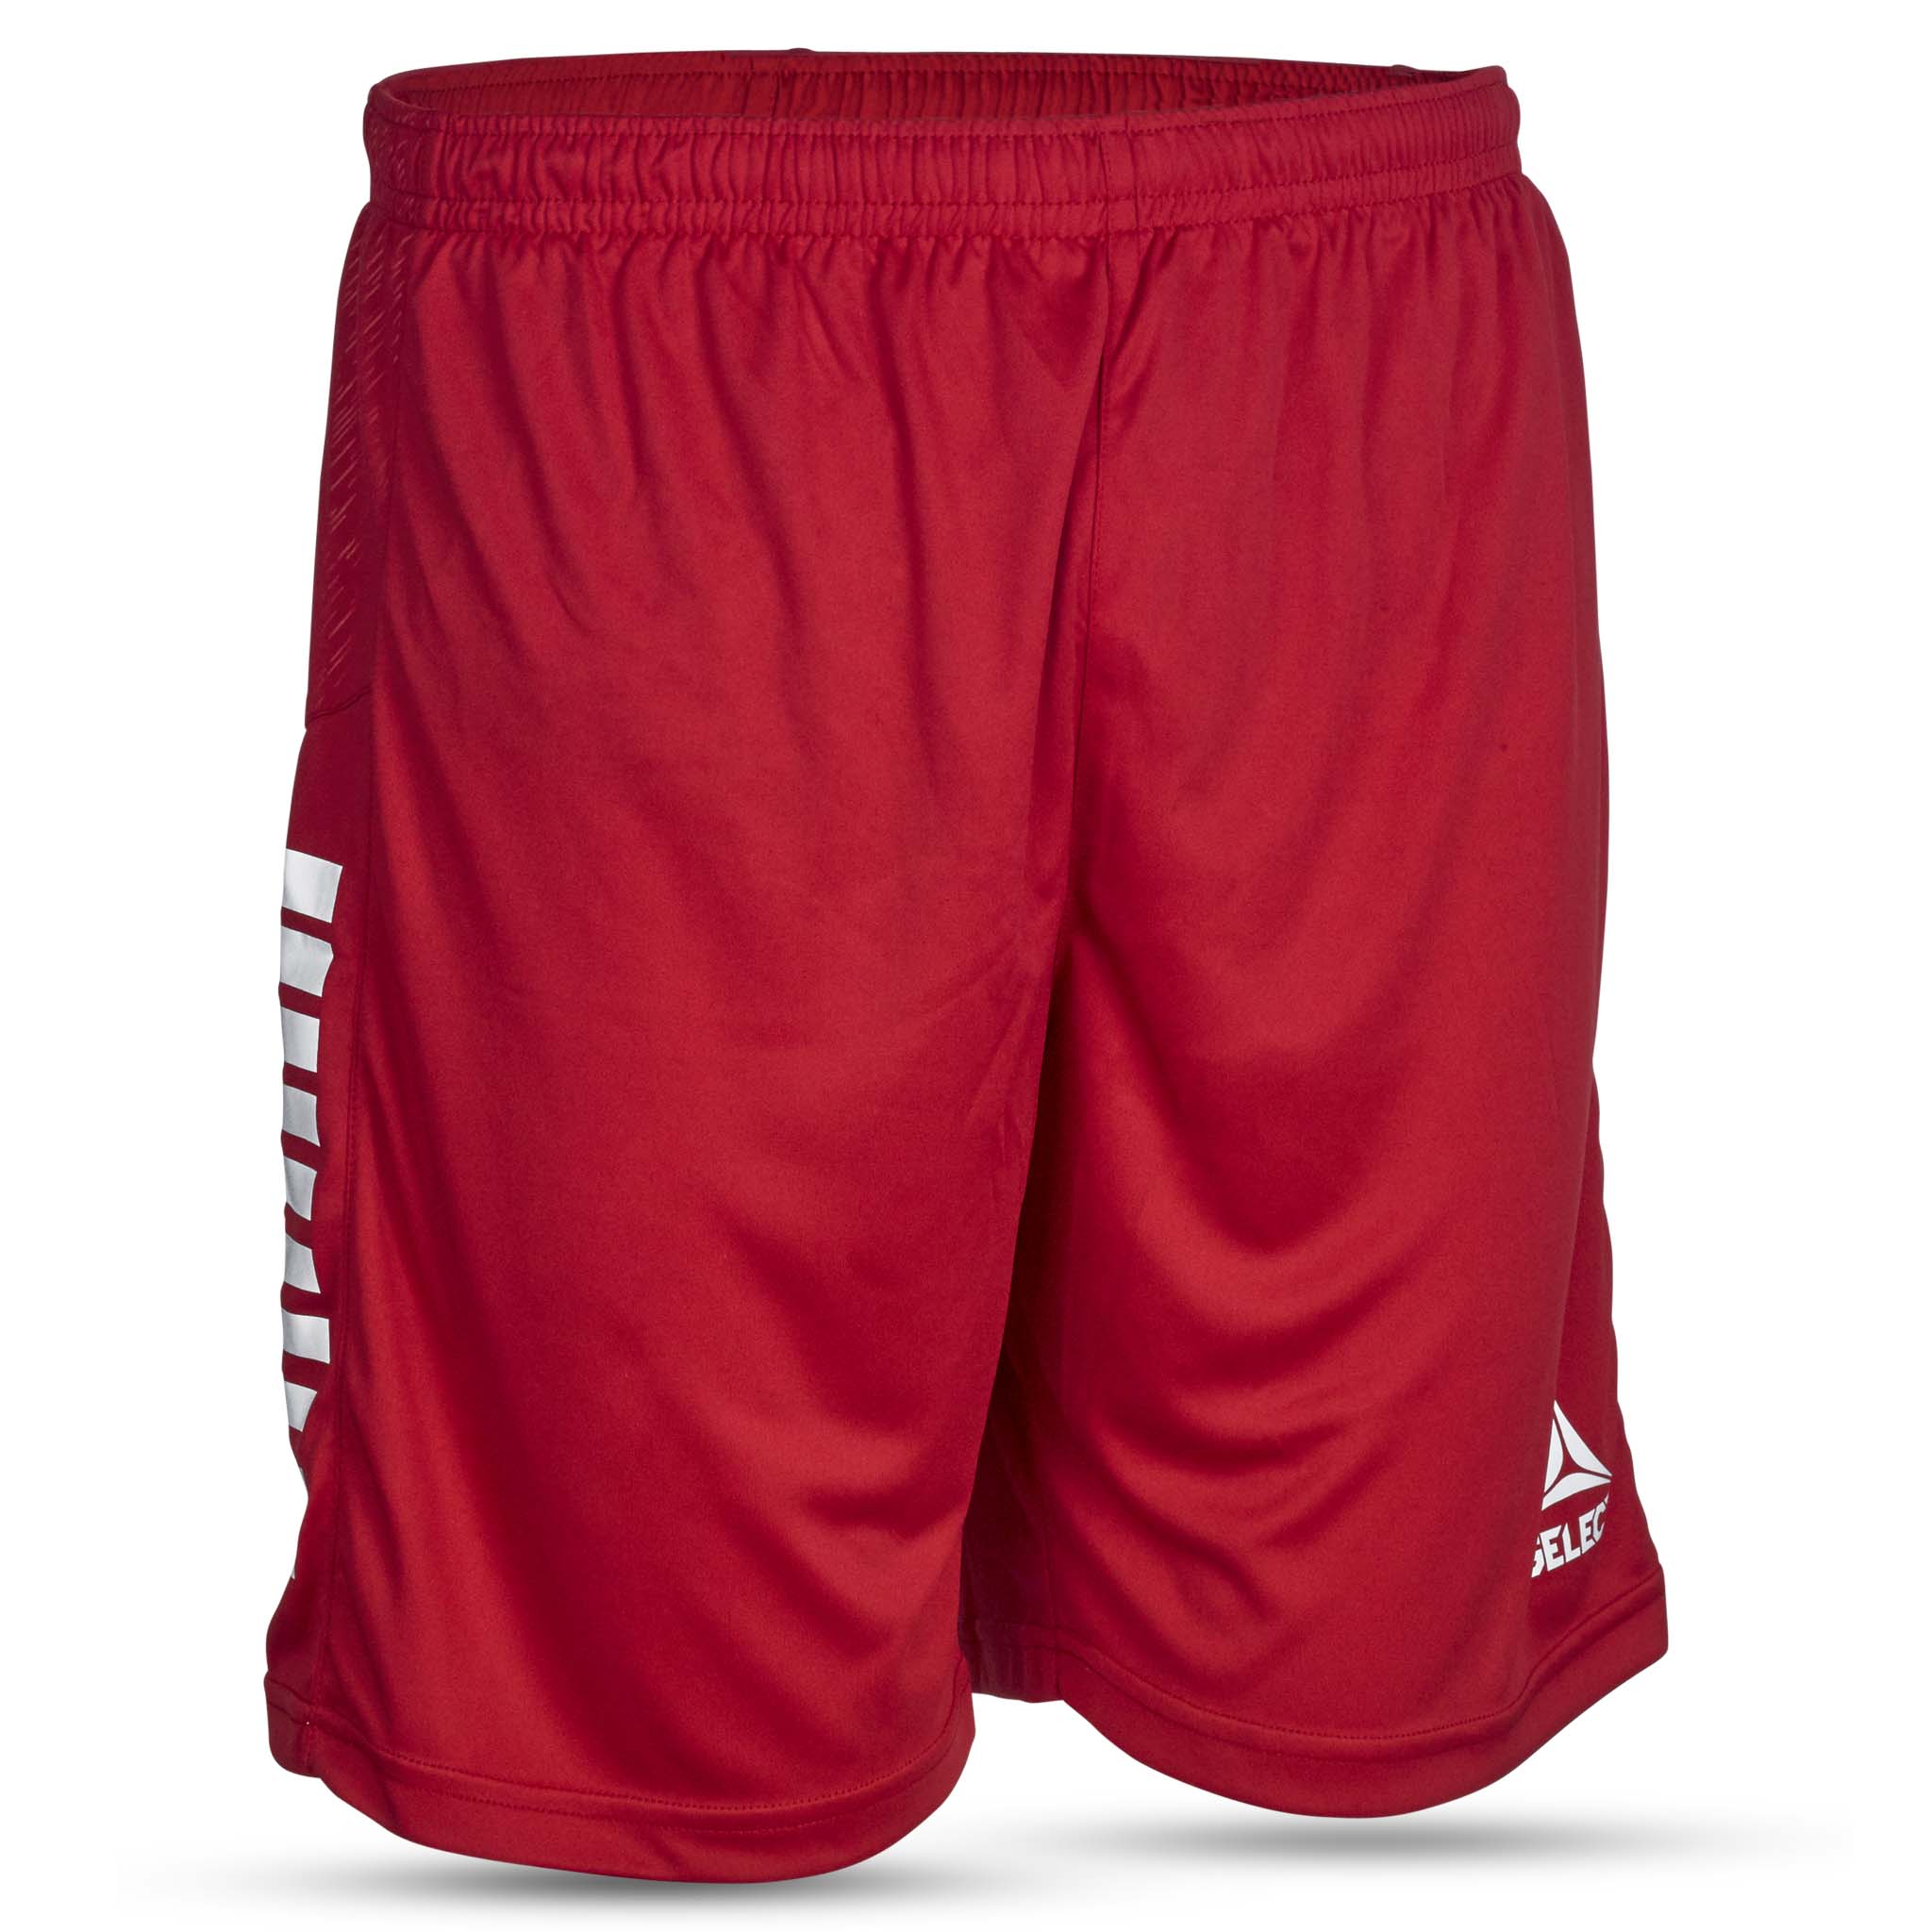 Spain Shorts - Barn #farge_rød